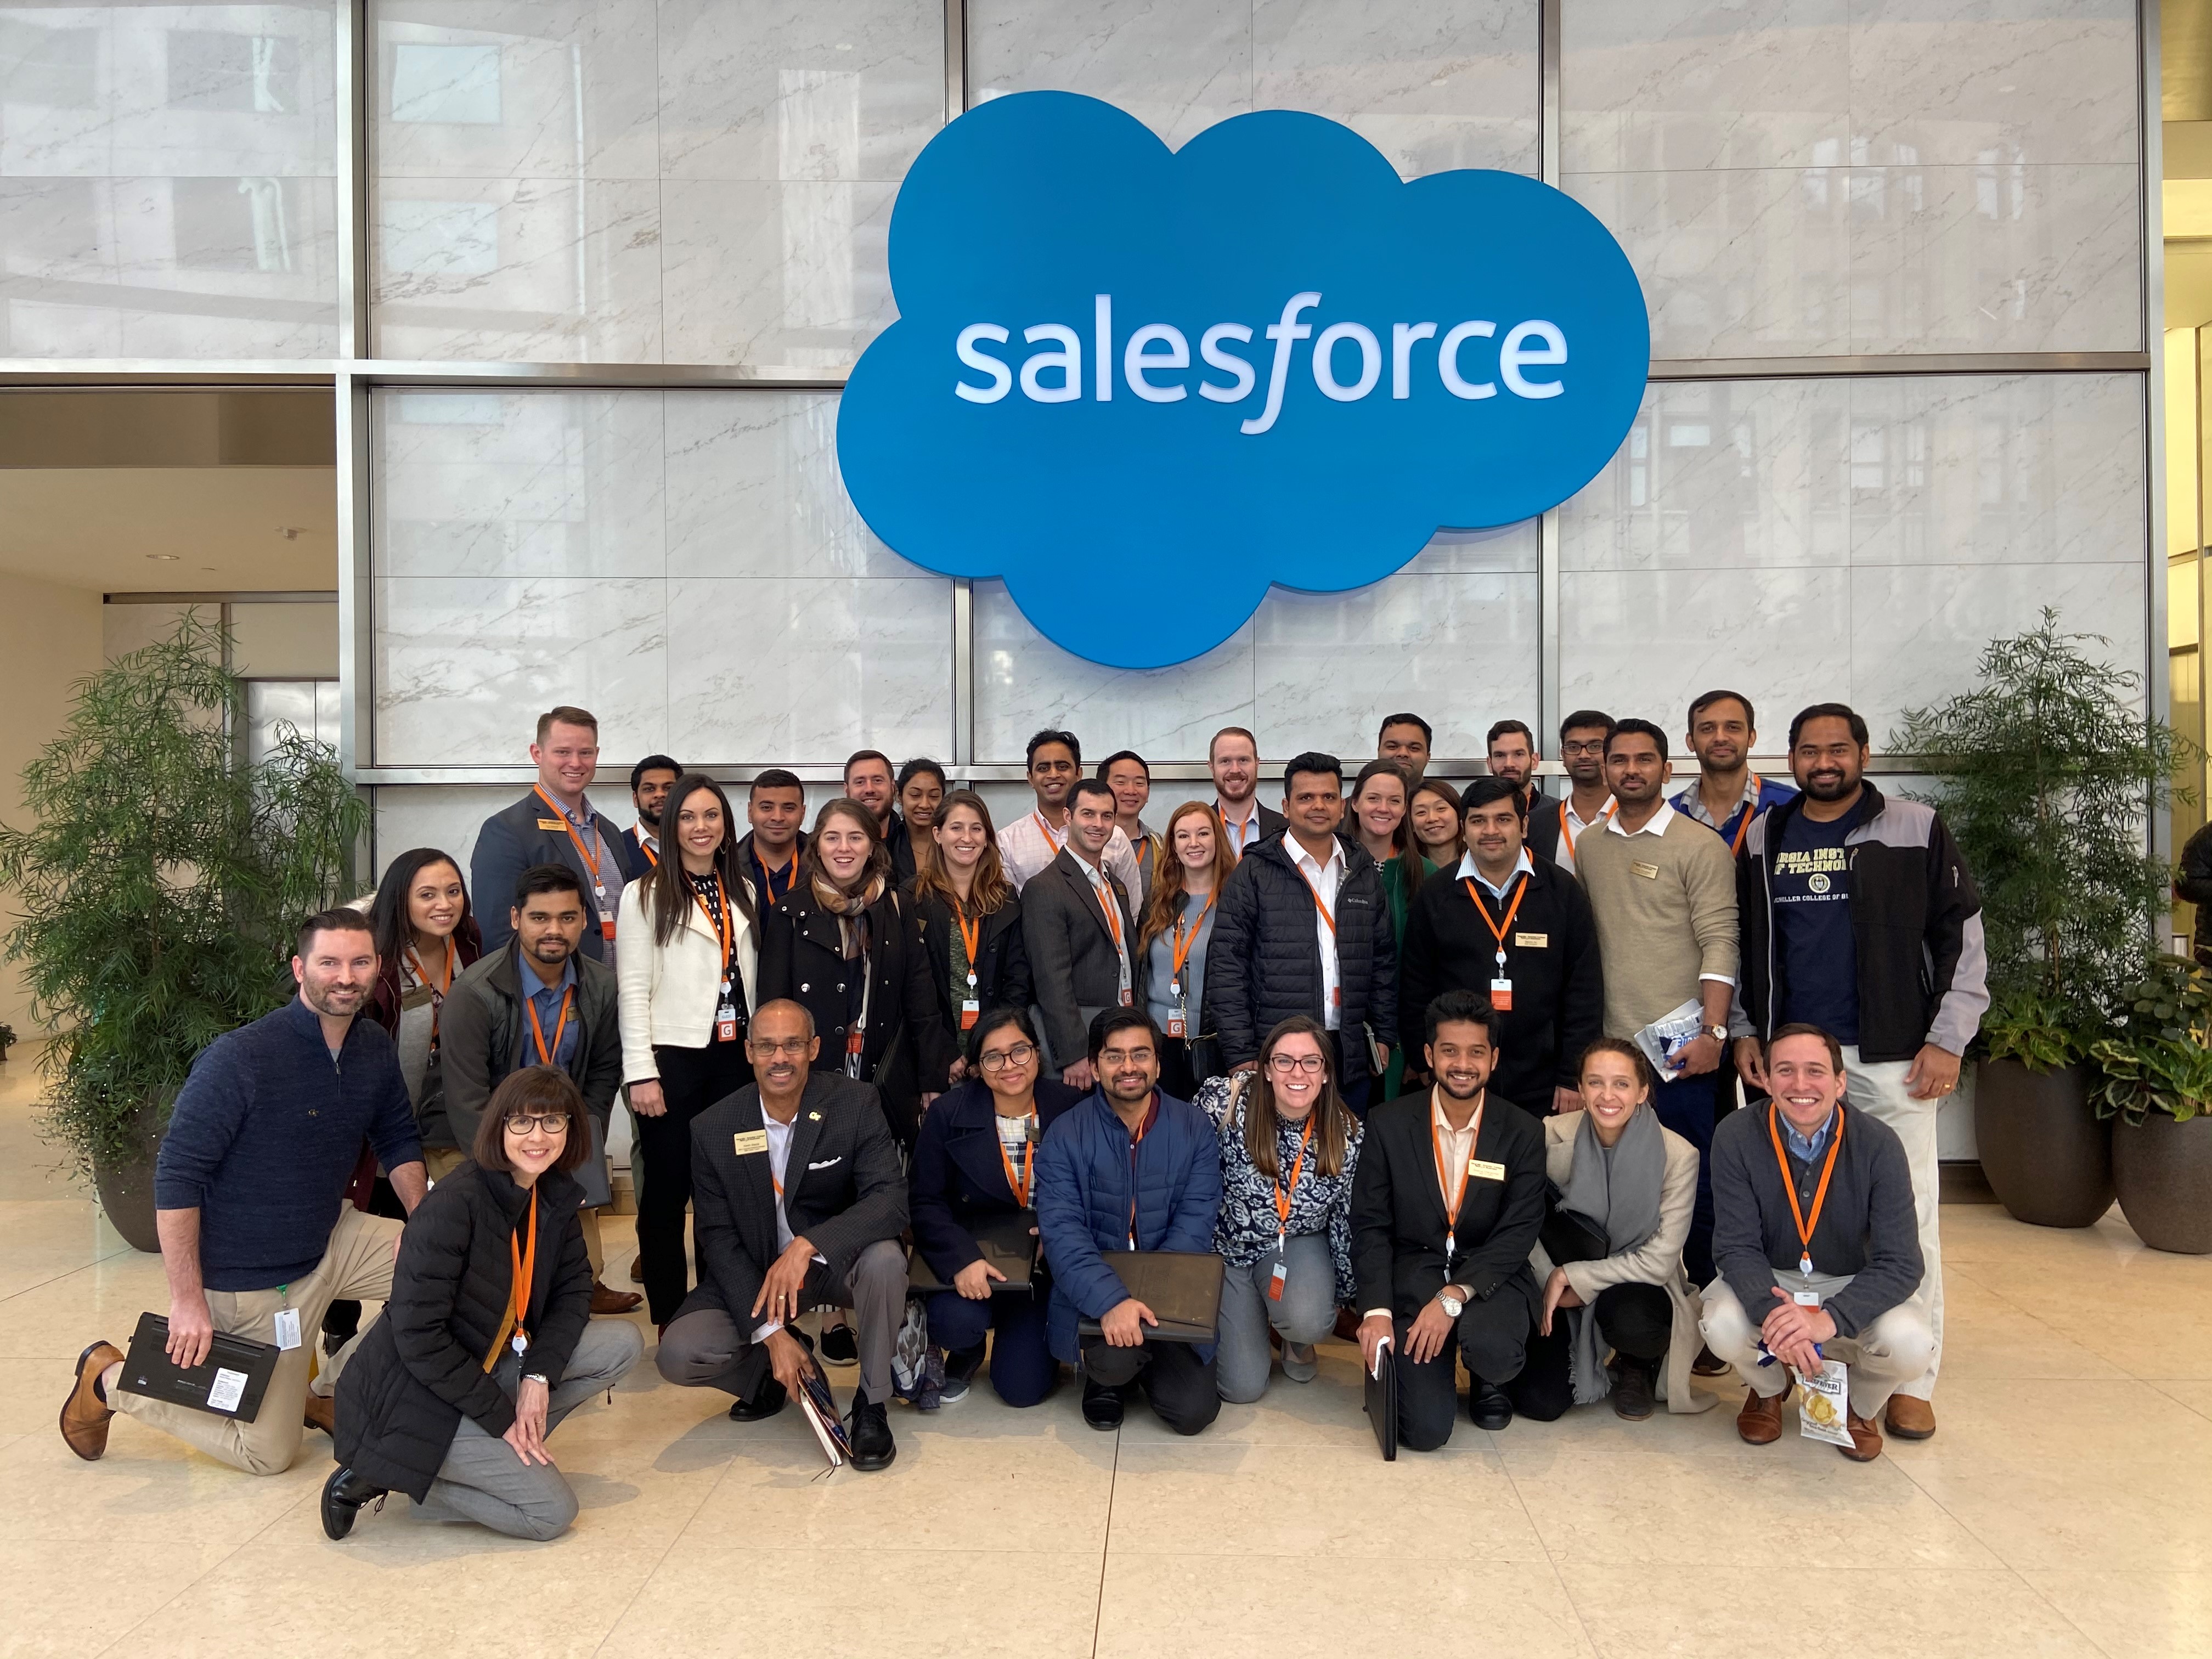 Salesforce corporate visit during the West Coast Tech Trek 